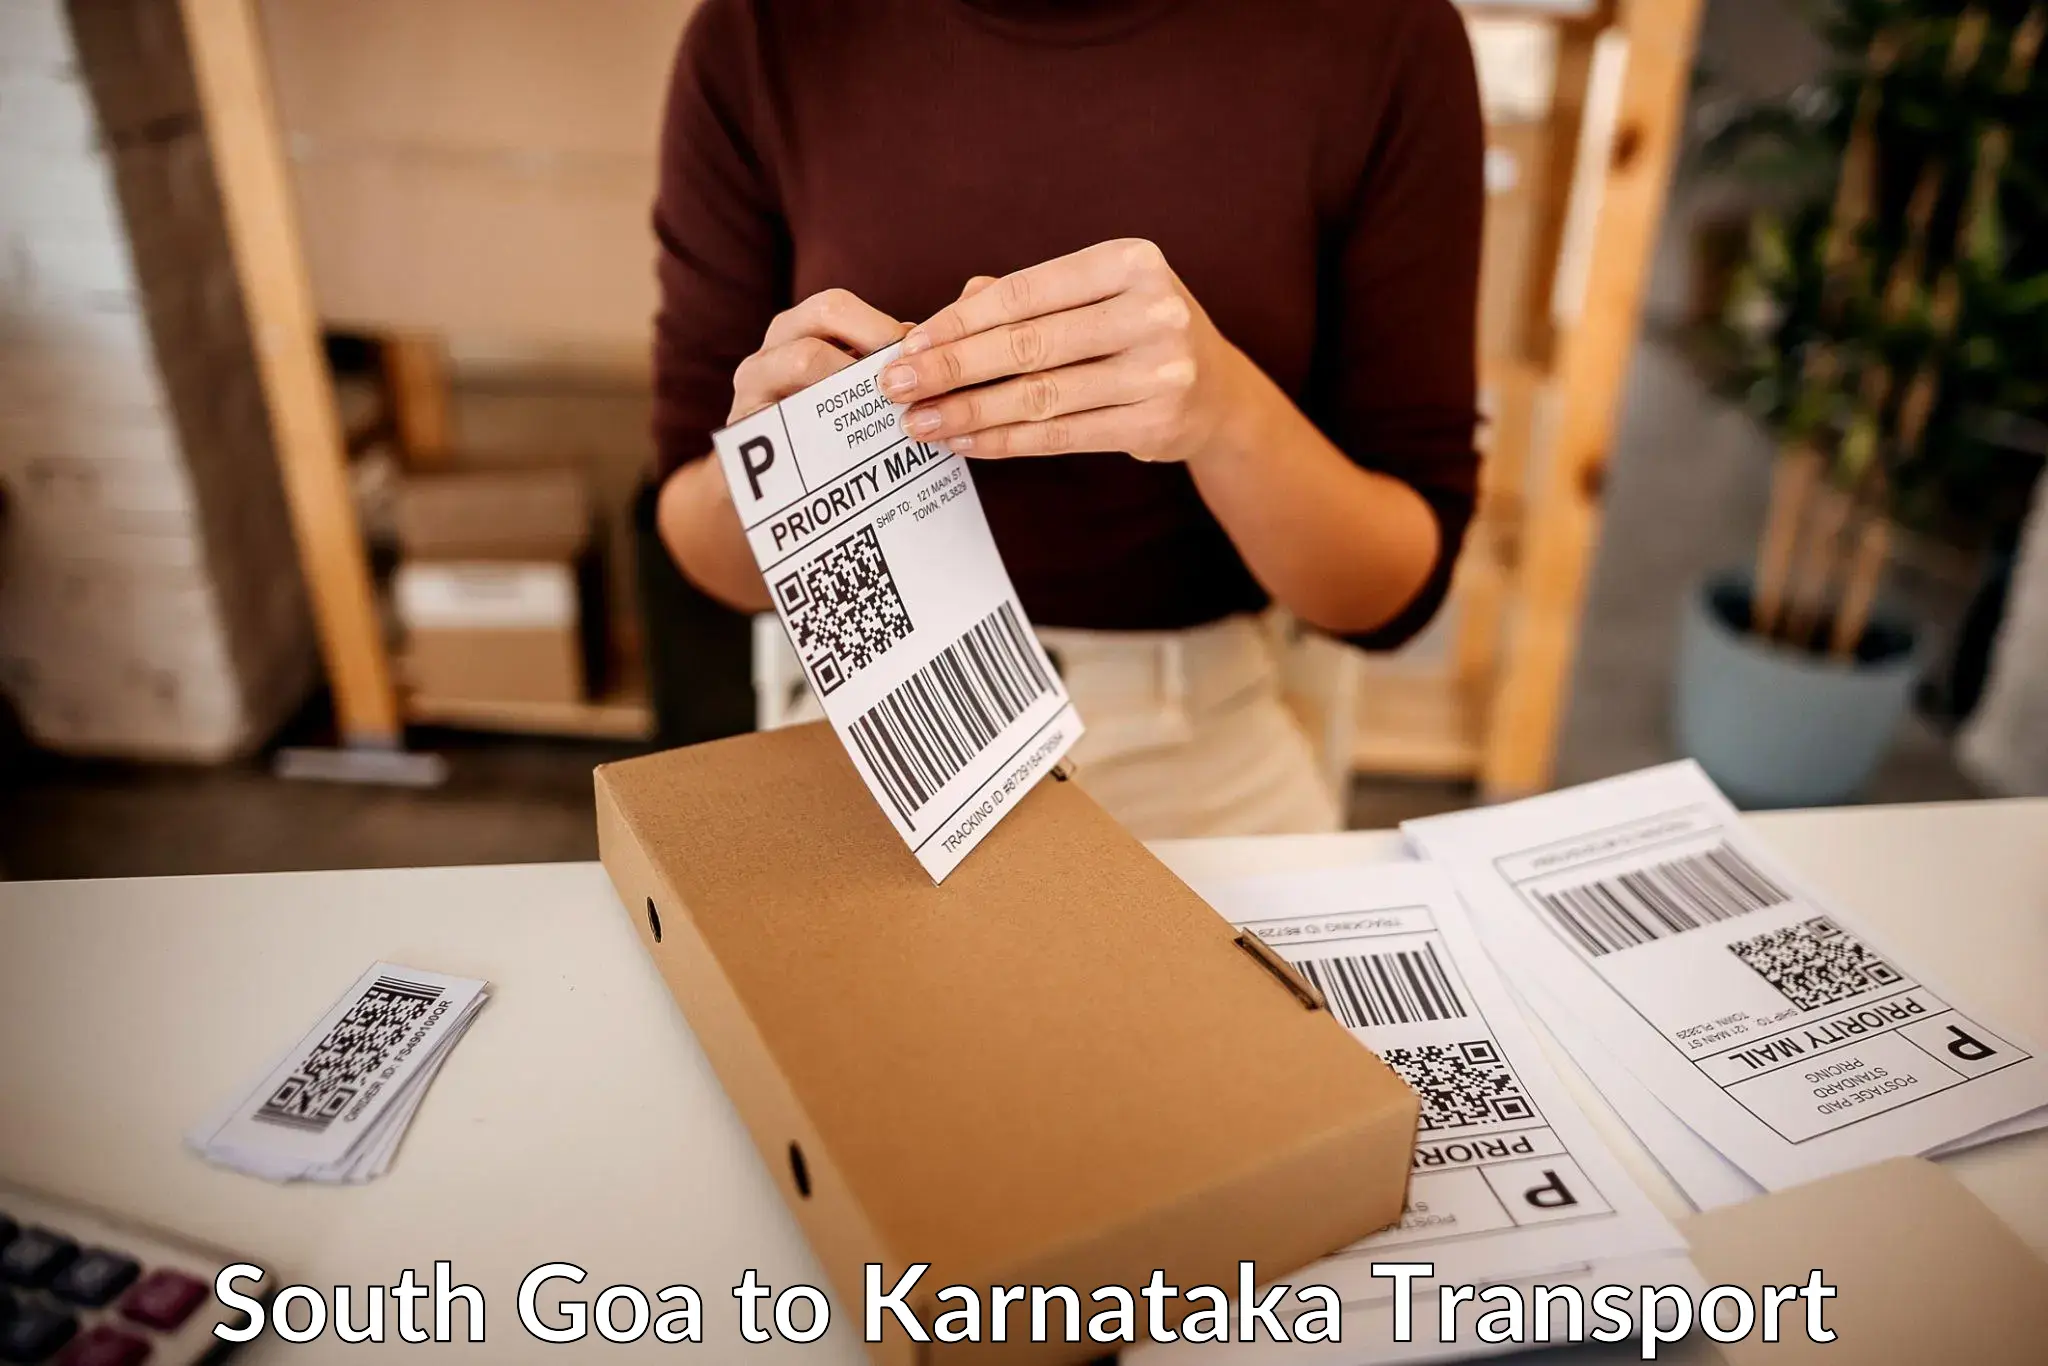 Nearby transport service South Goa to Karnataka